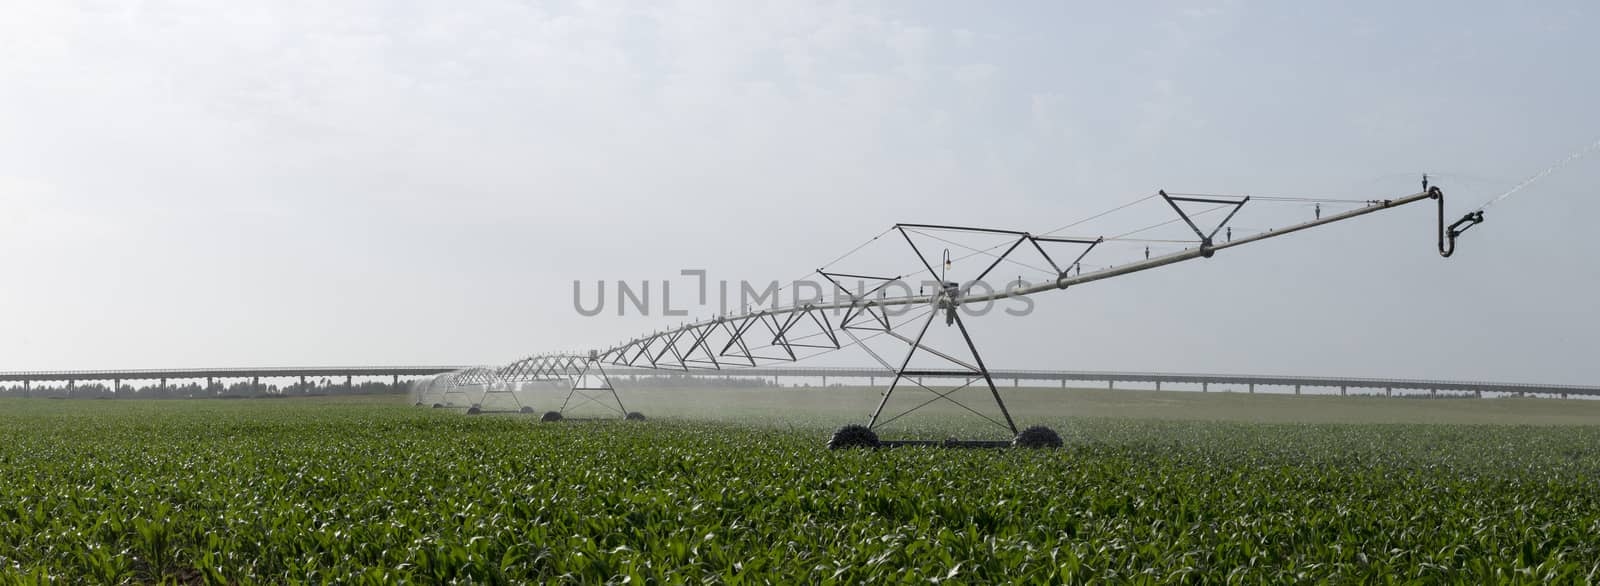 irrigation of corn field by membio